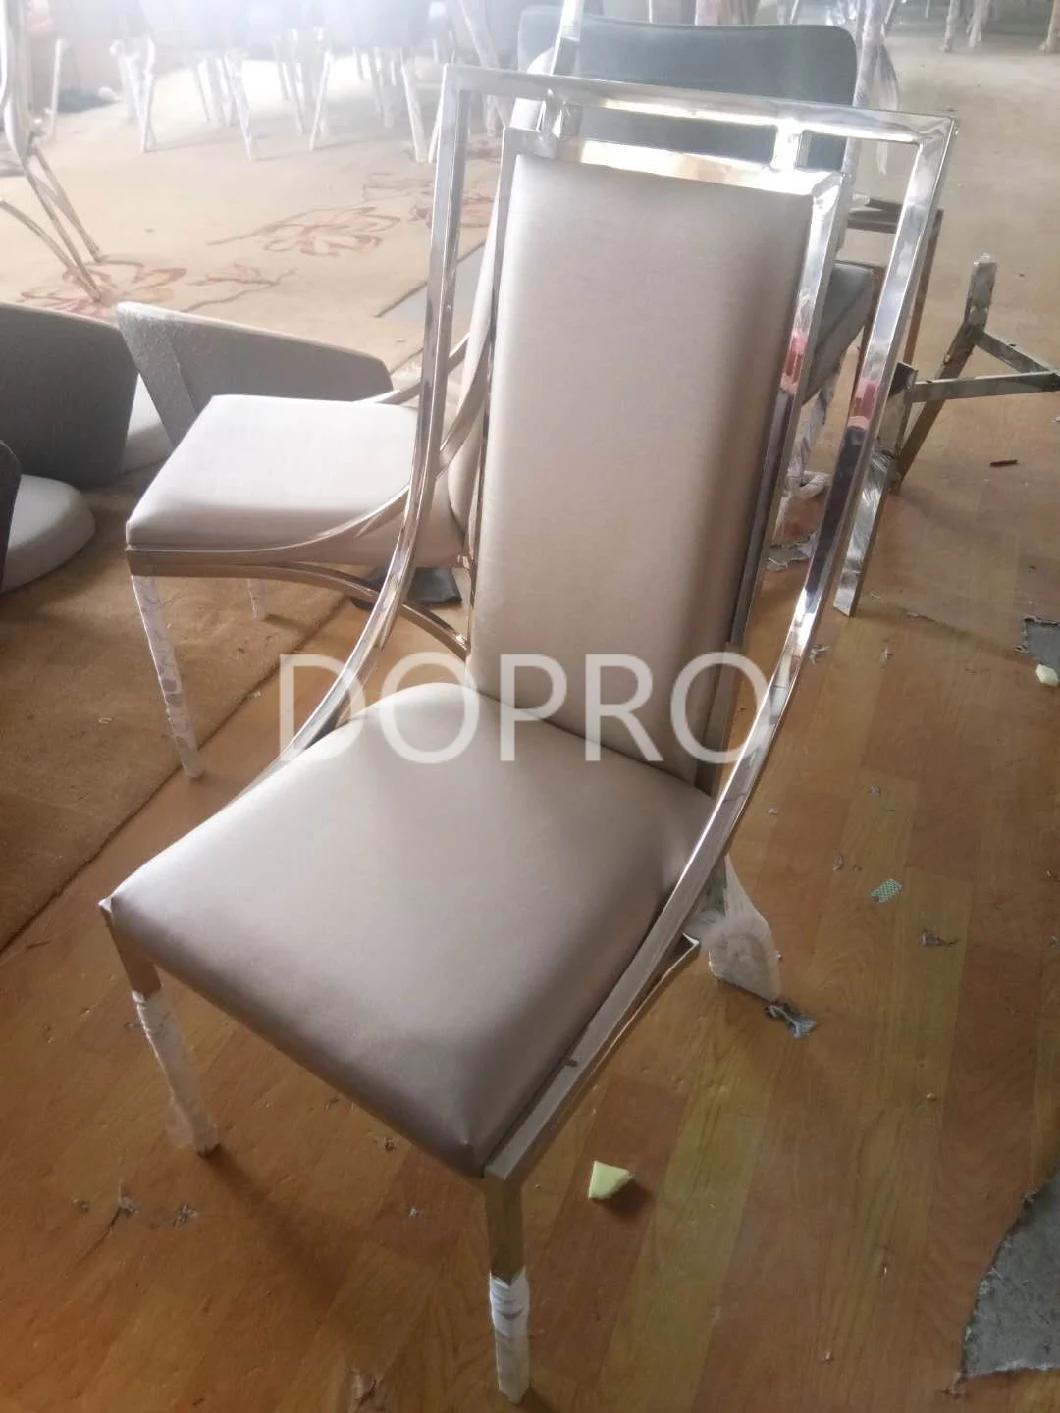 Popular Design Dining Chair Stainless Steel Leg